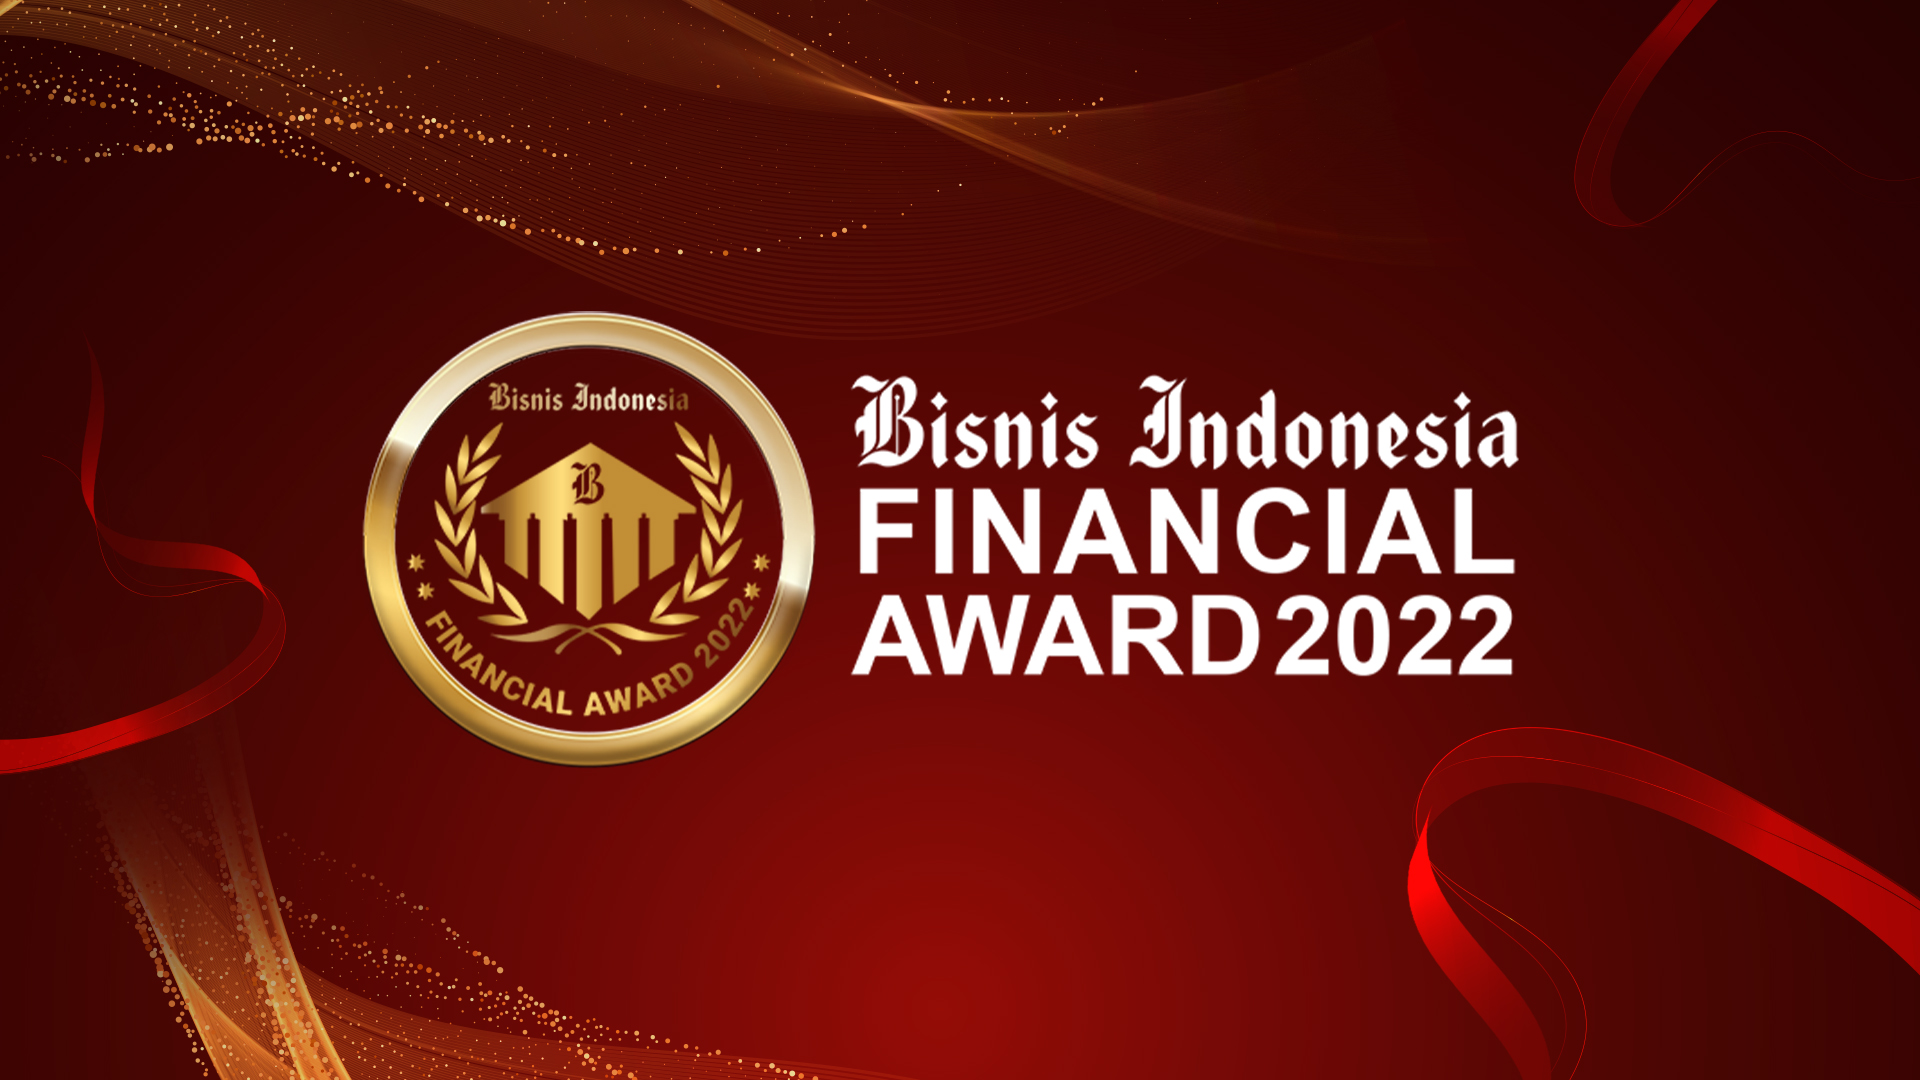 Bisnis Indonesia Financial Award (BIFA) 2022